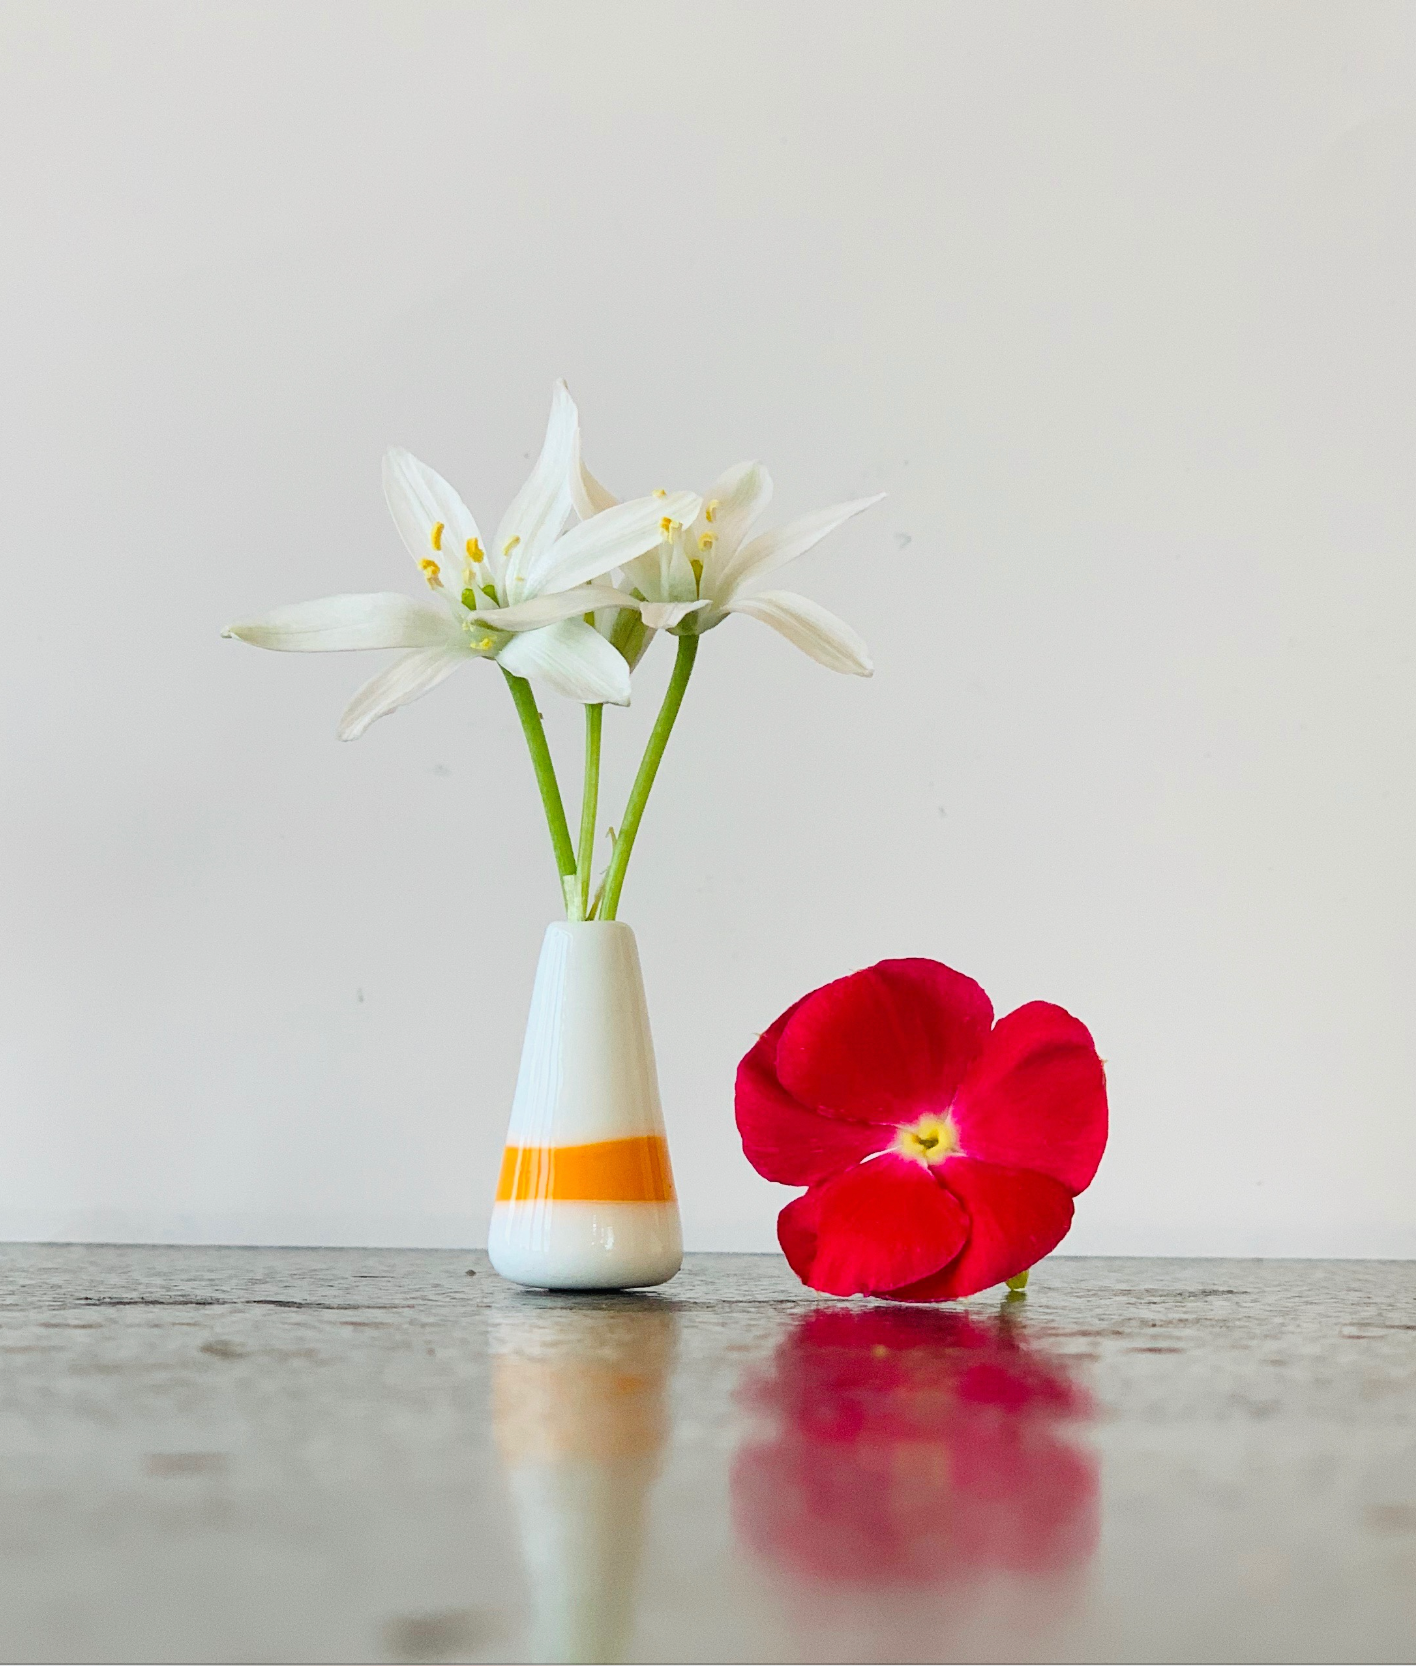 Custom Dandelion Vase - White and Orange